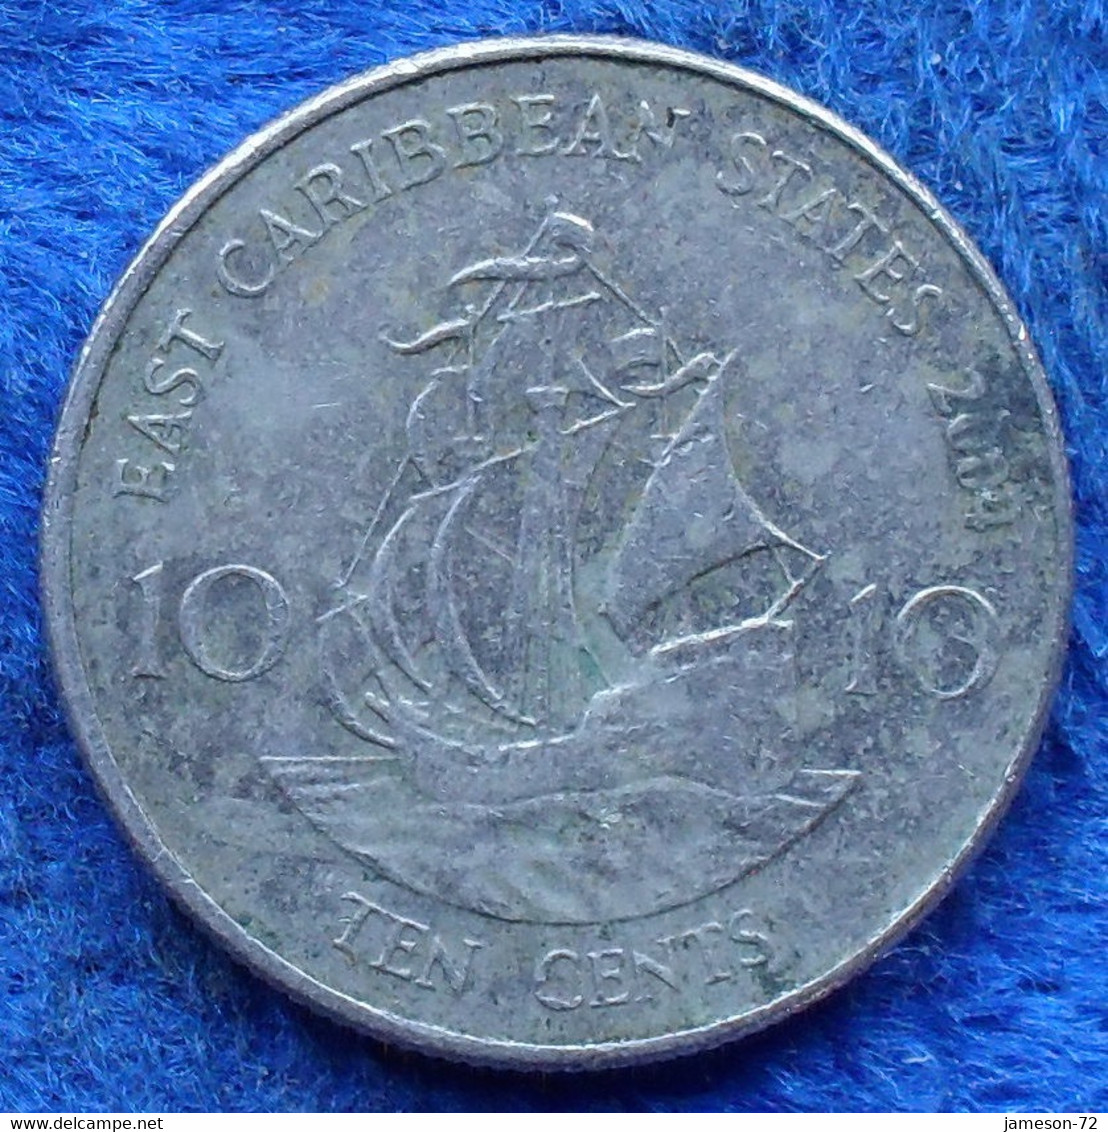 EAST CARIBBEAN STATES - 10 Cents 2007 KM# 37 Elizabeth II - Edelweiss Coins - East Caribbean States